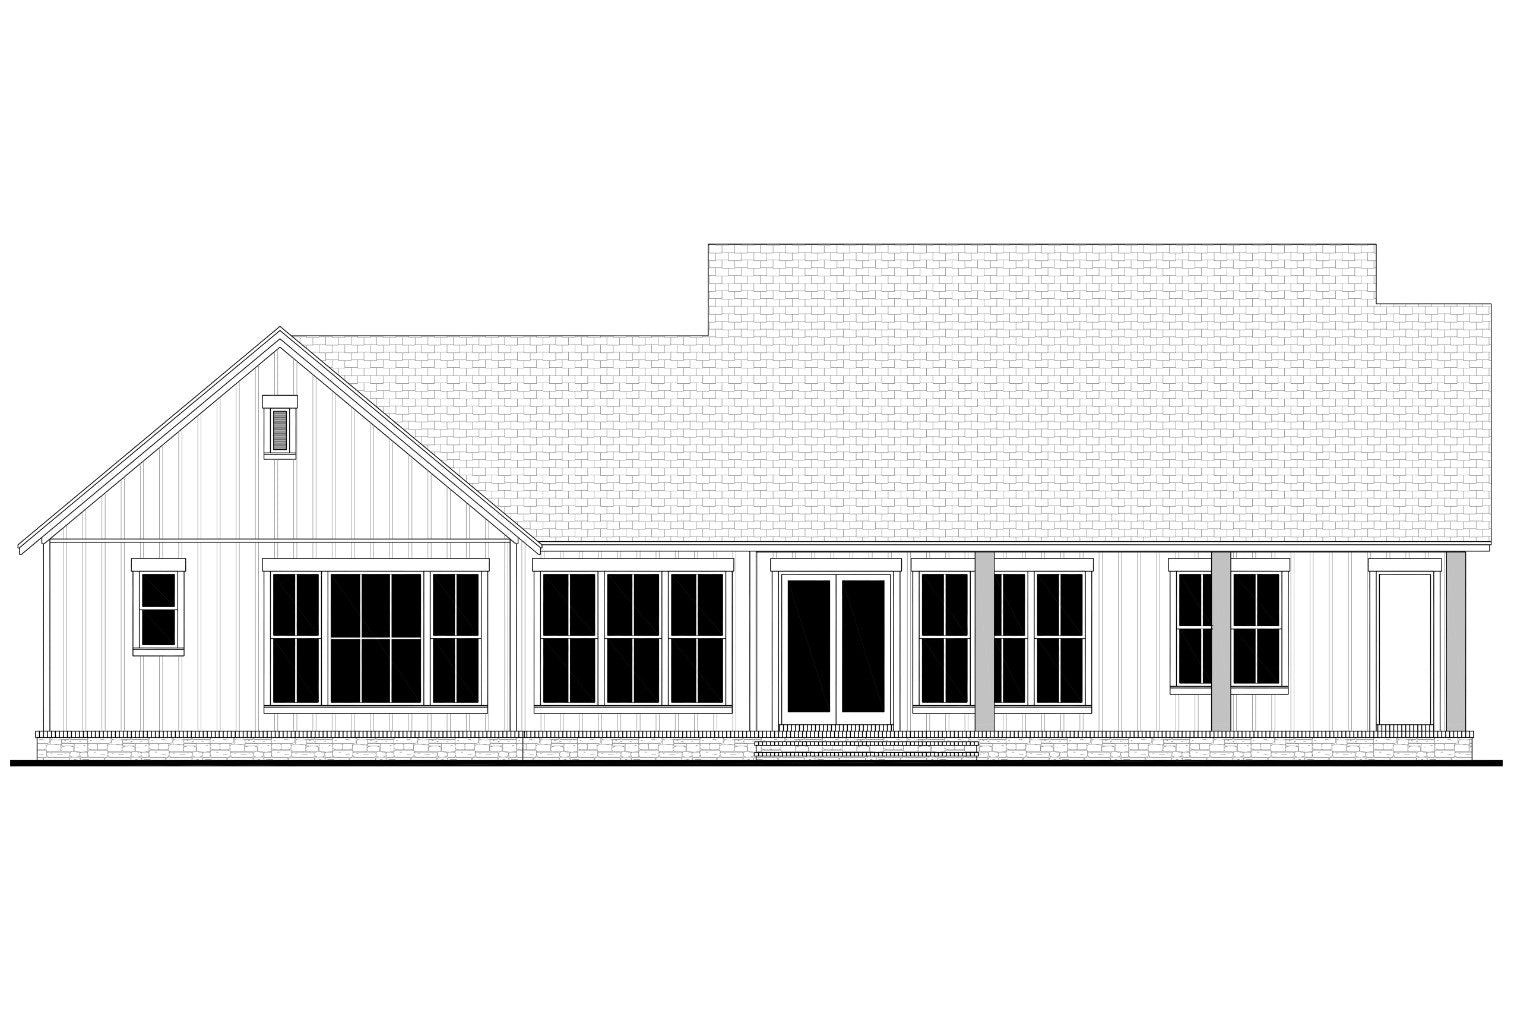 Pine Creek House Plan: Rustic Elegance, Modern Comfort